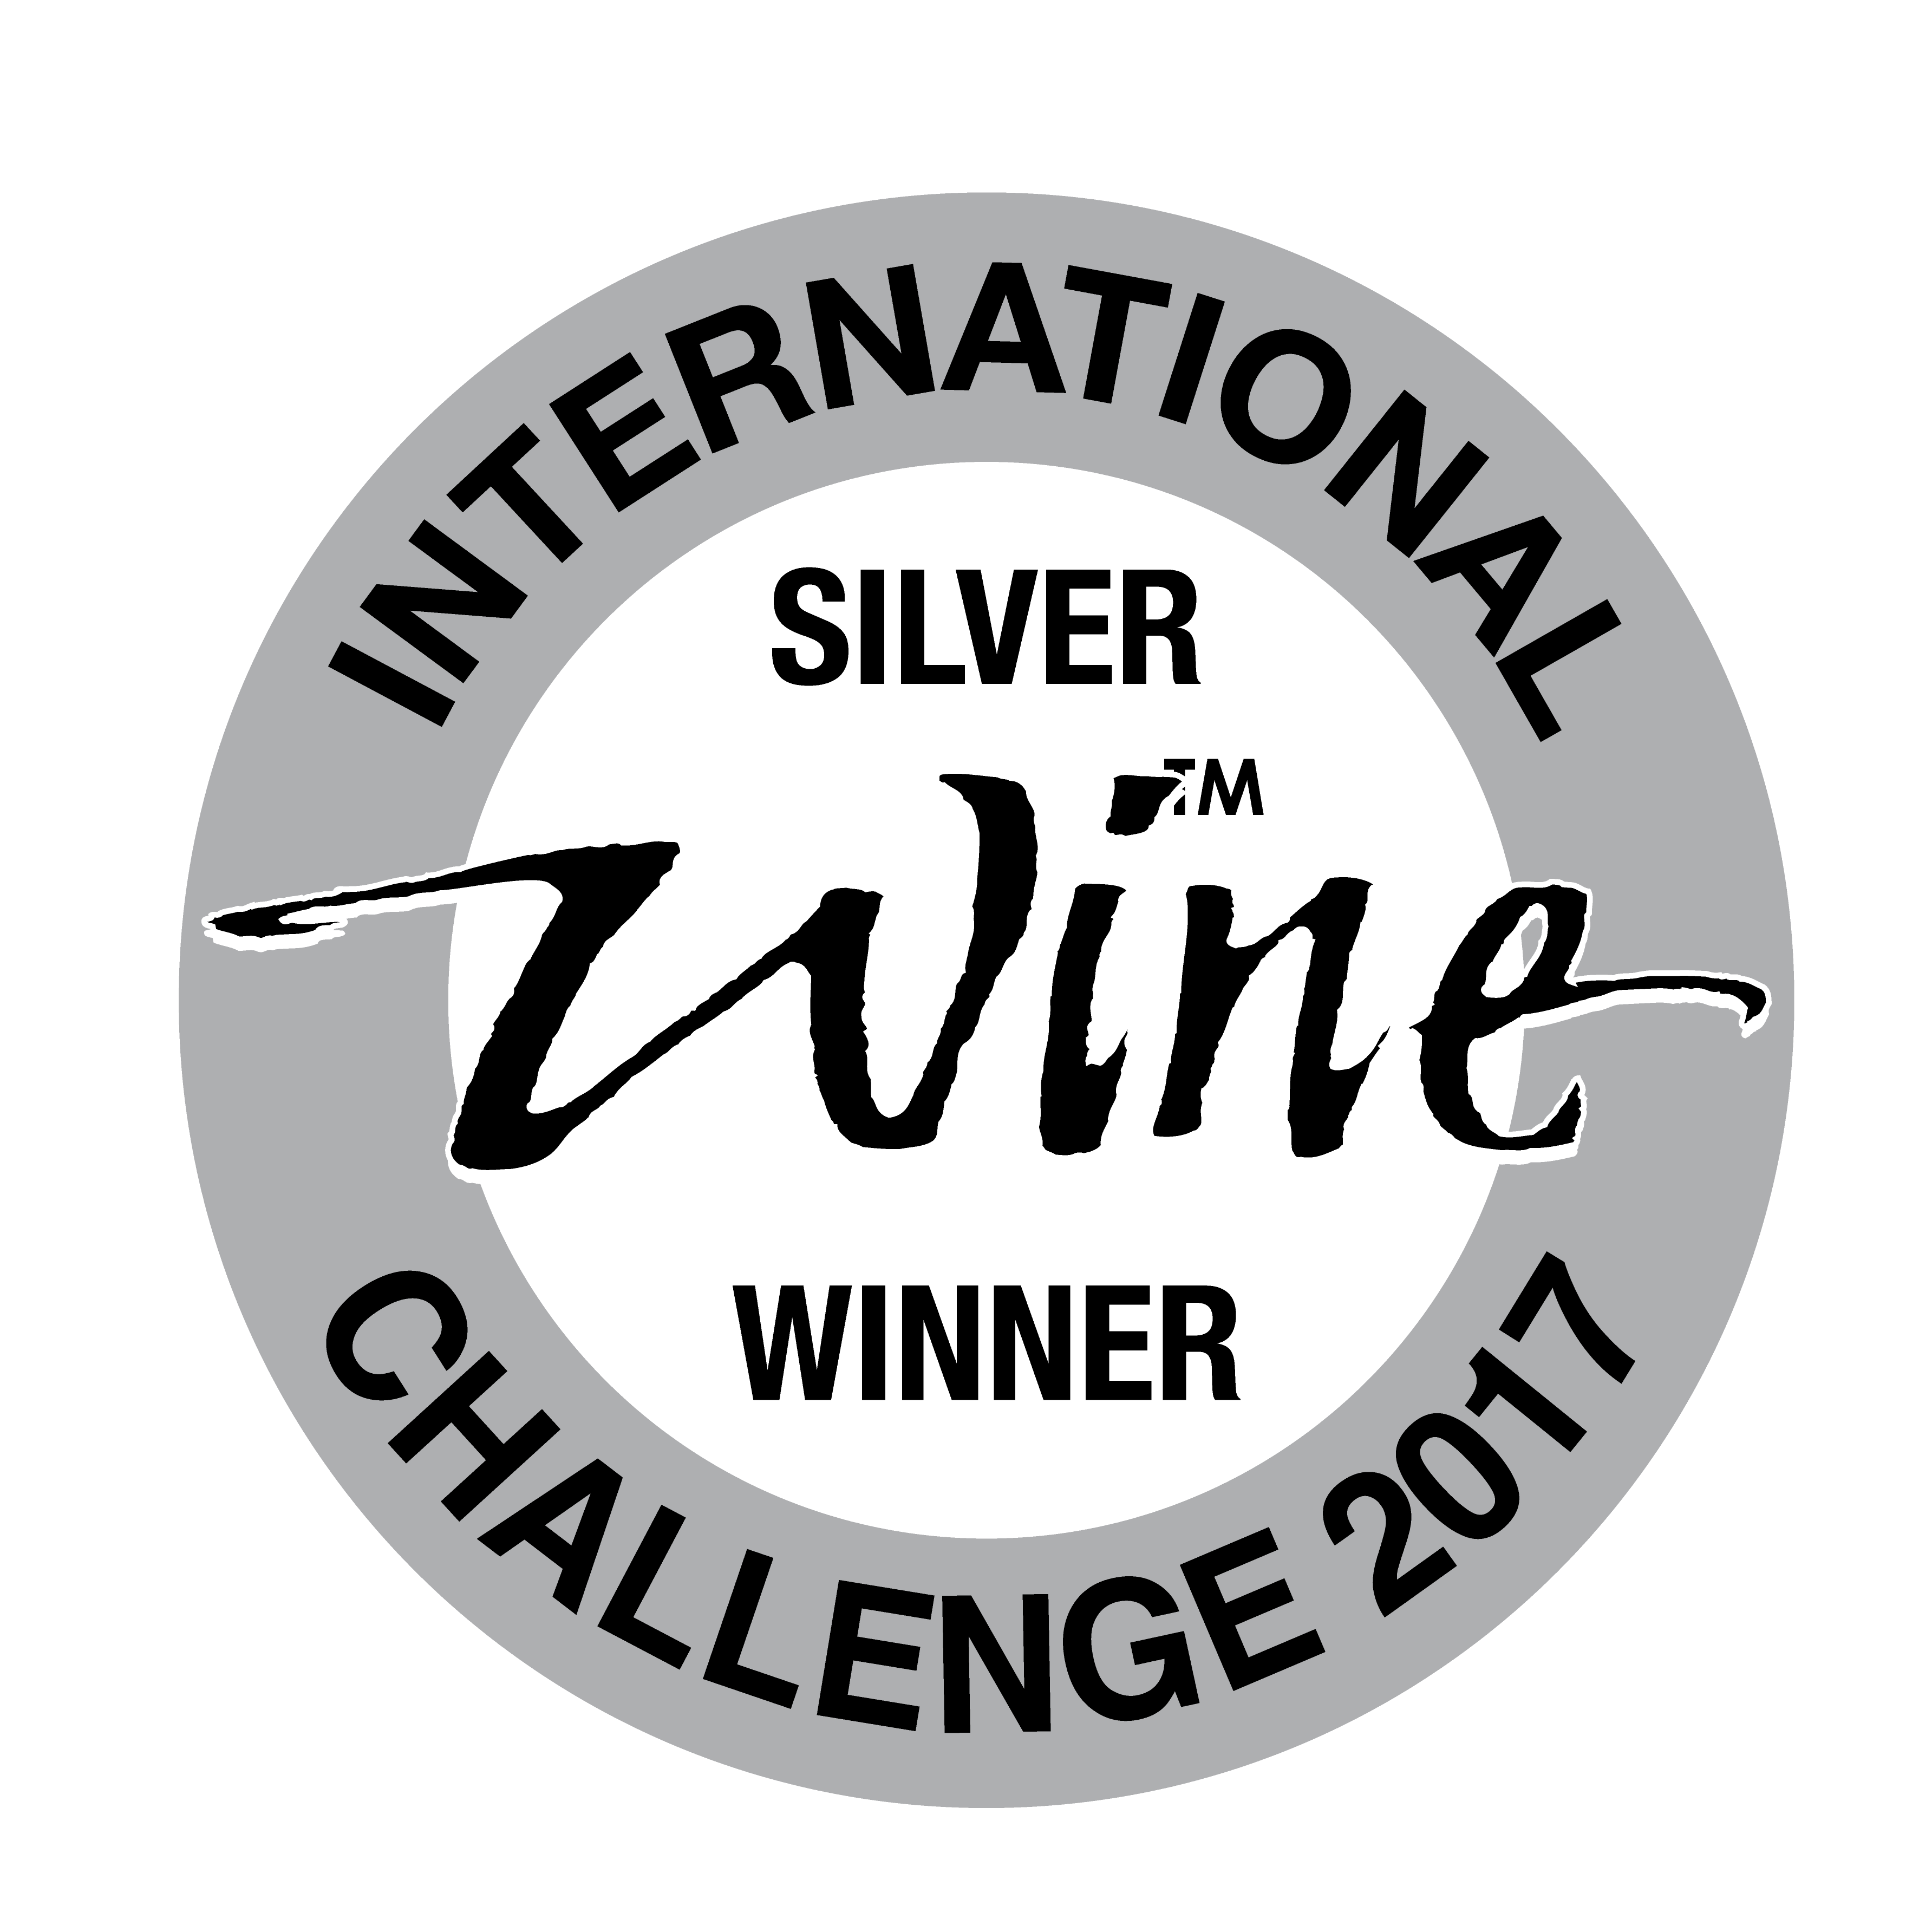 IWC International Wine Challenge 2017 Silver Medal